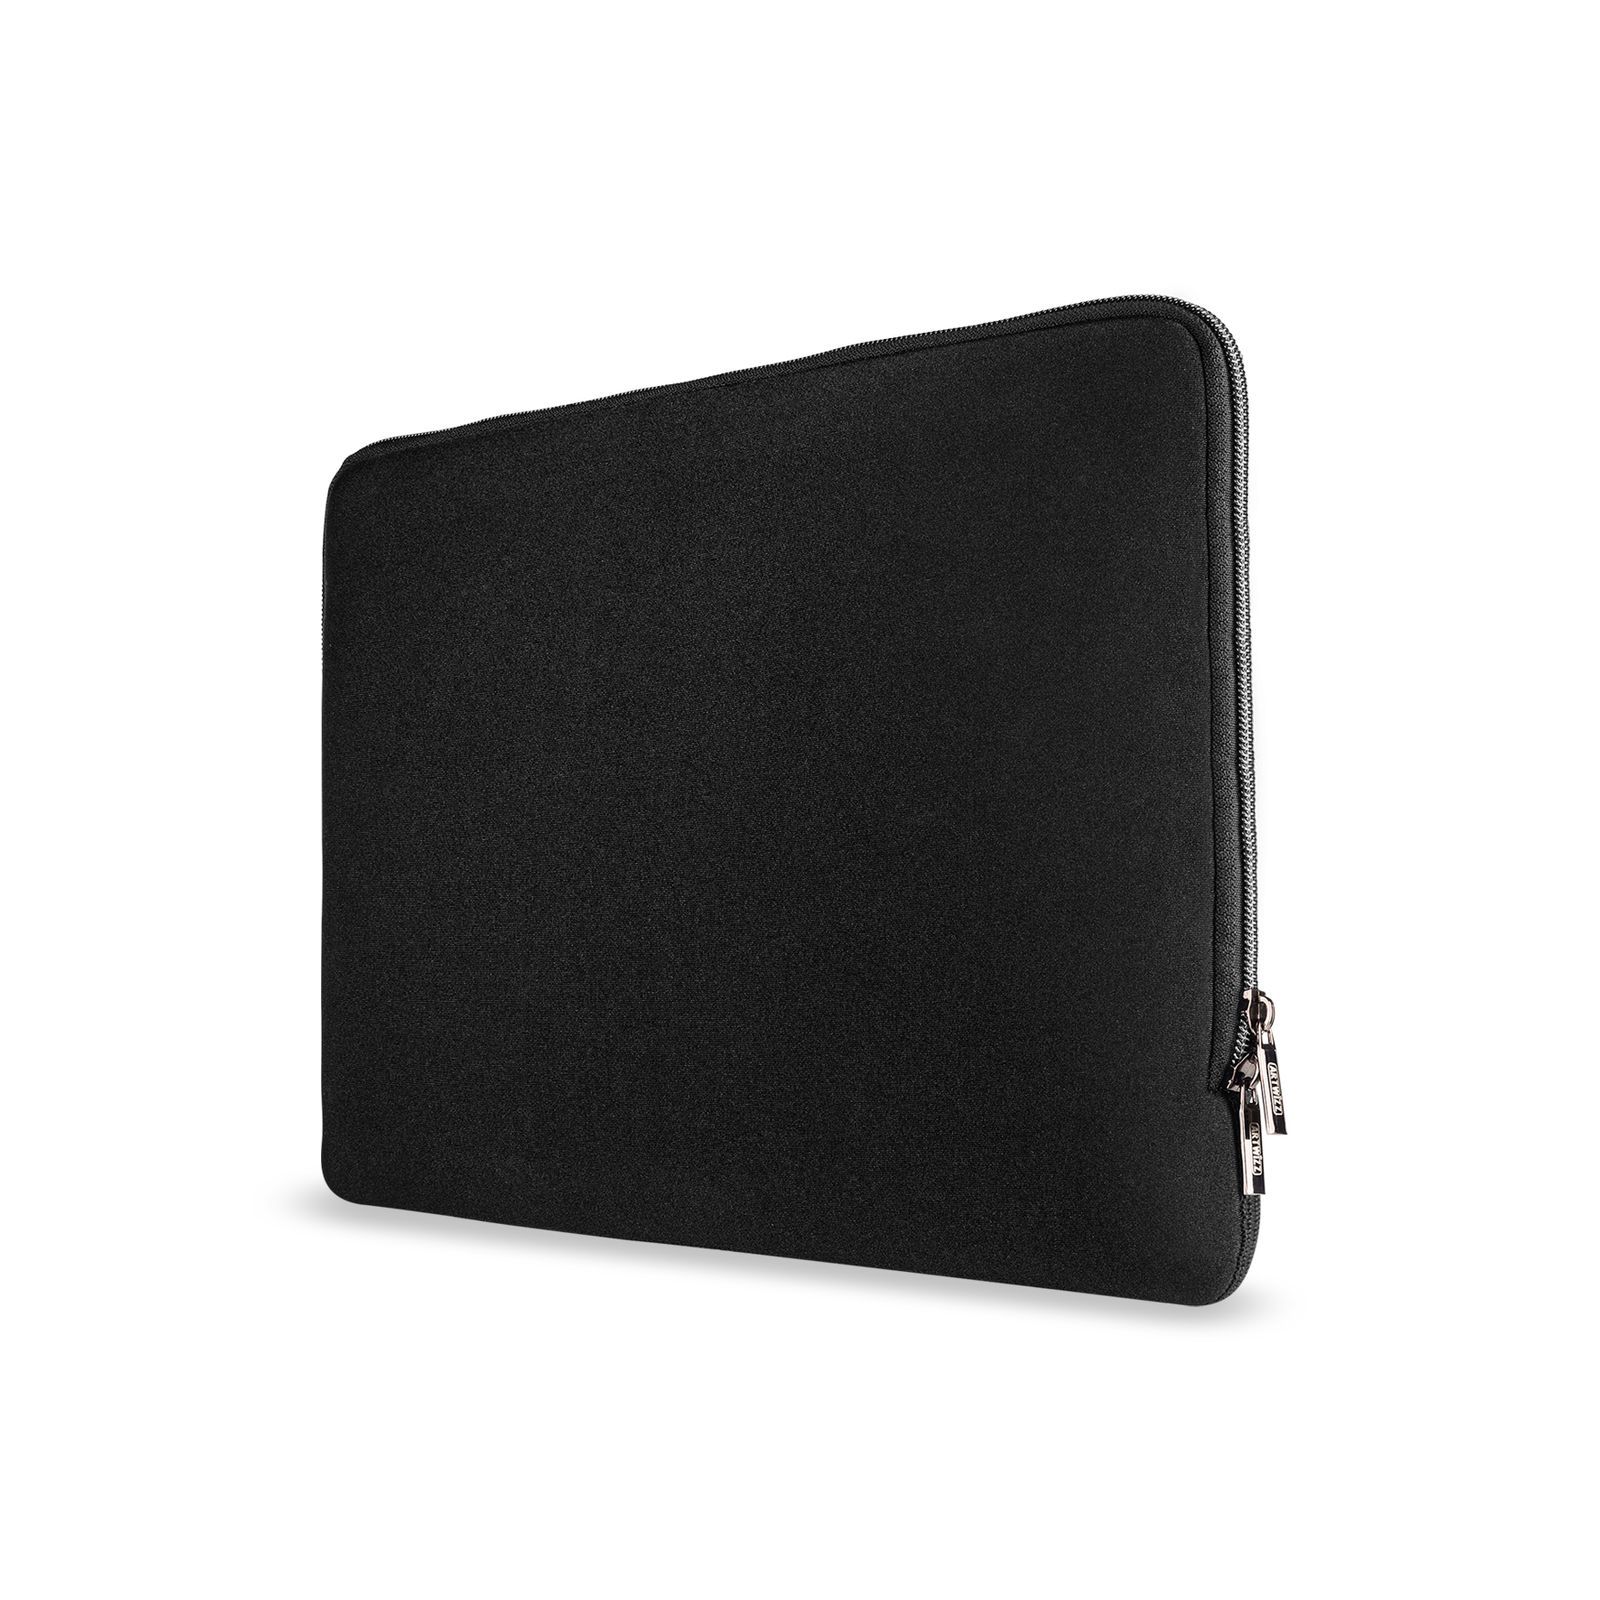 Neoprene Sleeve Apple Sleeve Schwarz Tablet für Sleeve ARTWIZZ Neopren,